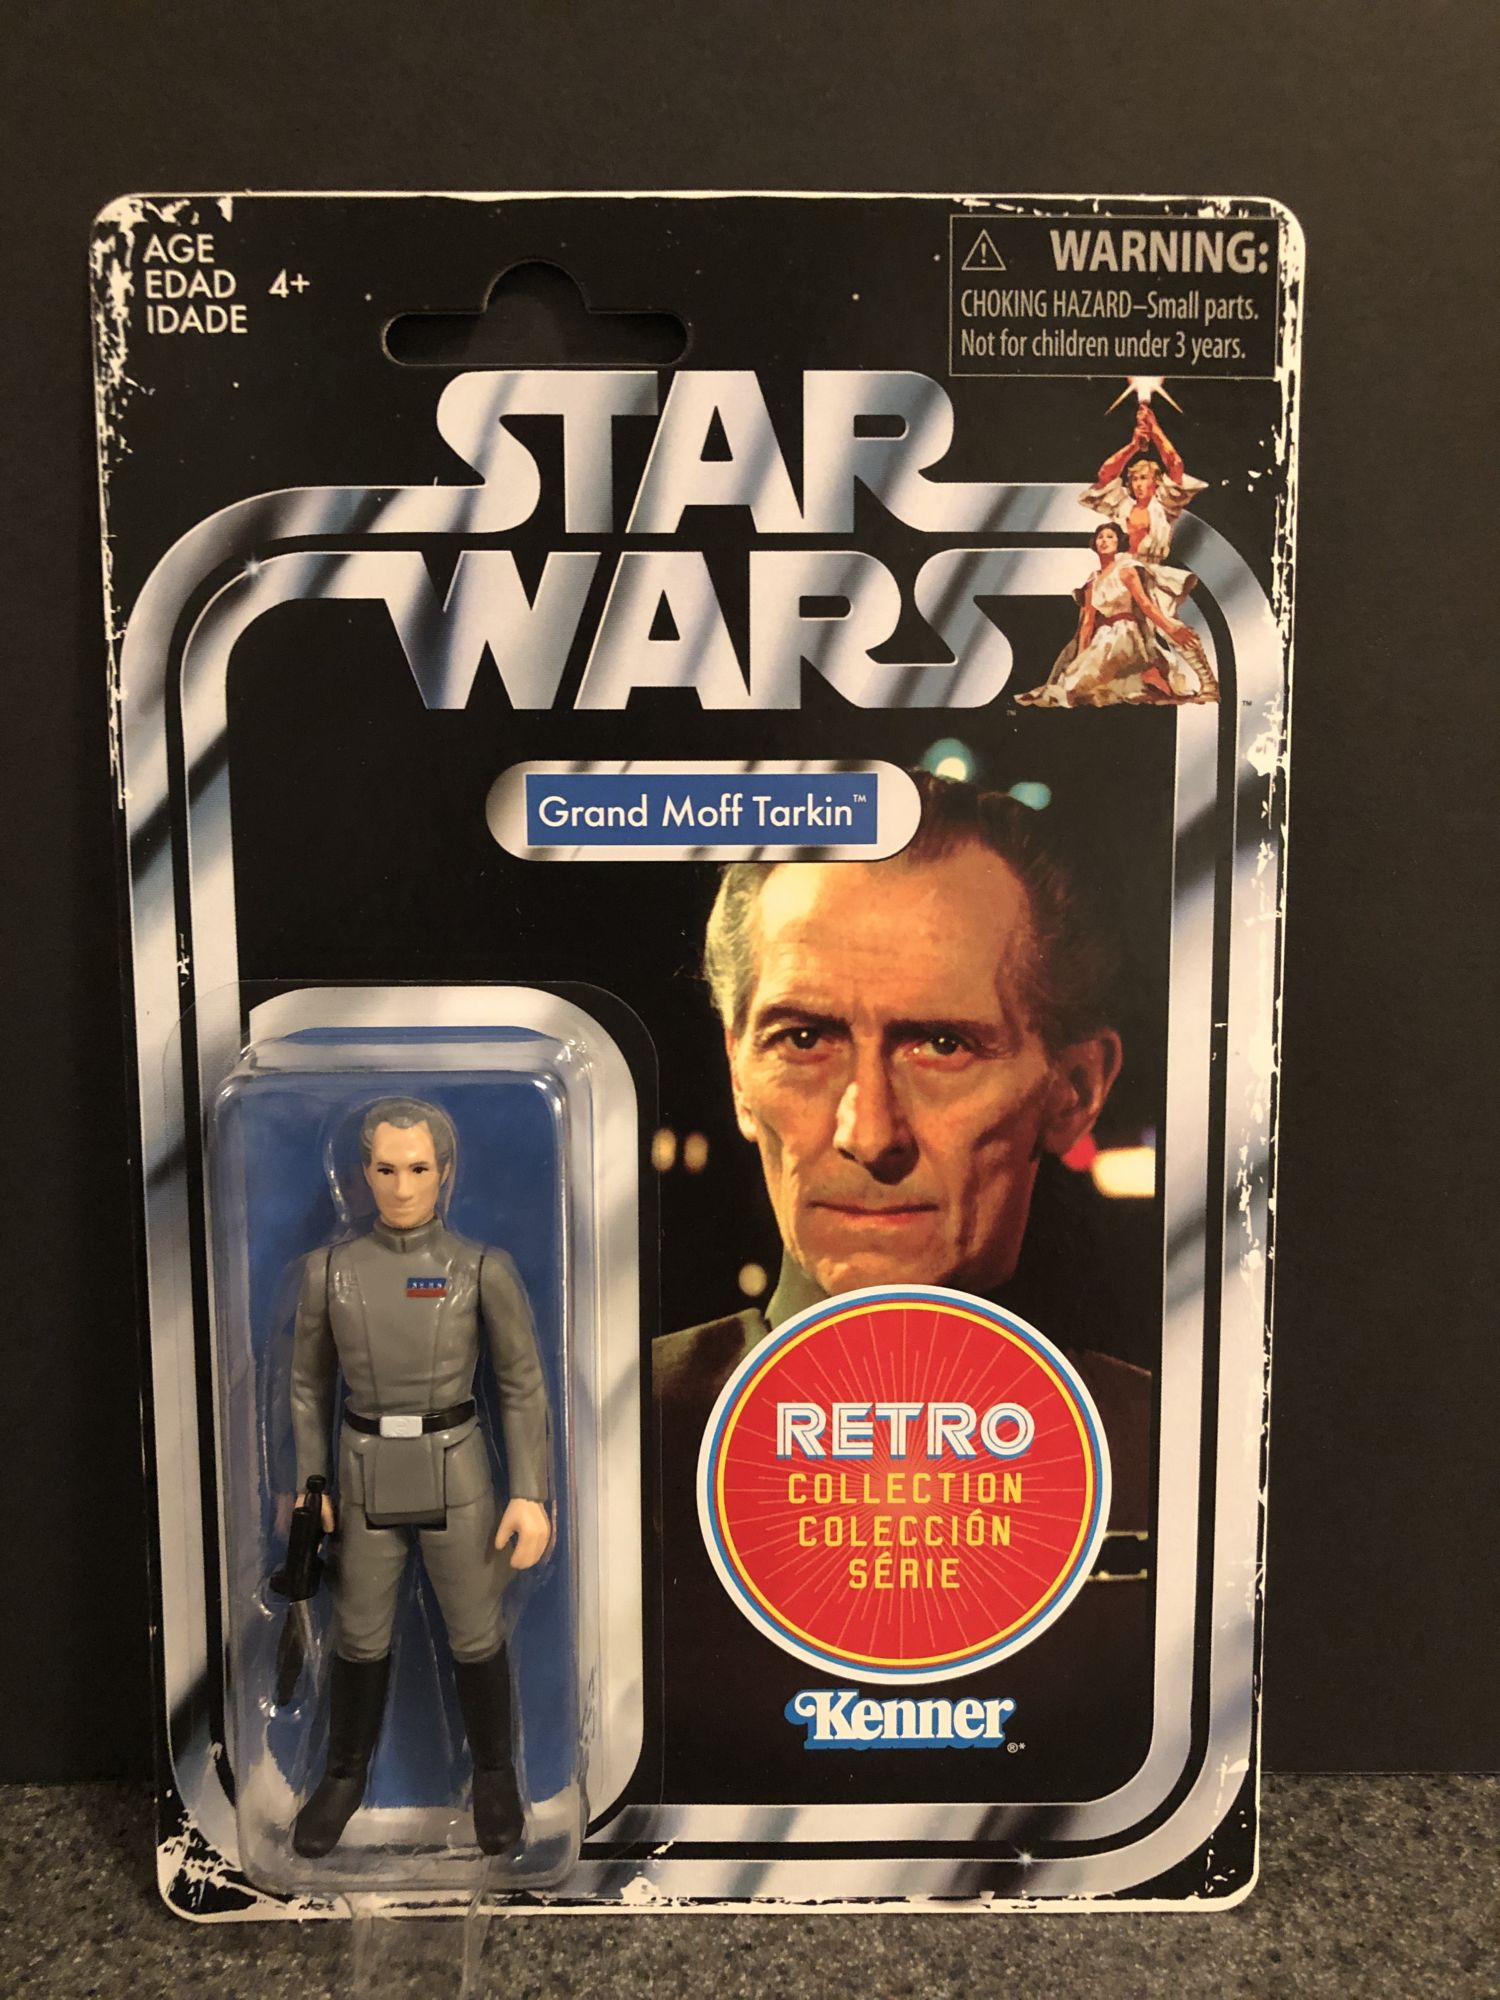 The Star Wars Retro Collection Tarkin 